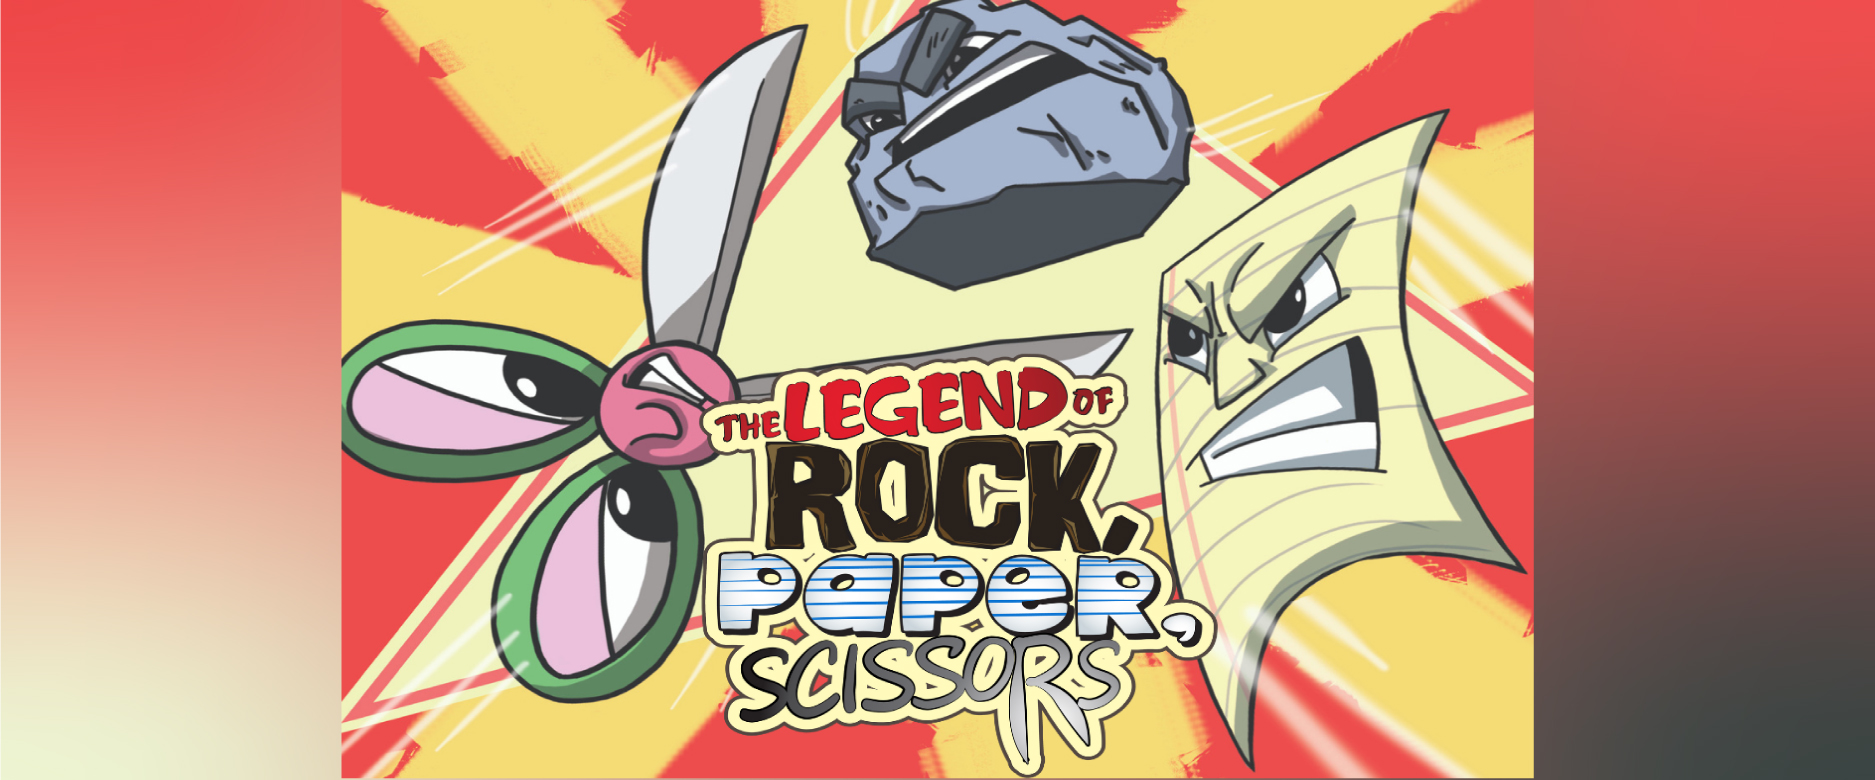 Rock Paper Scissors Logo